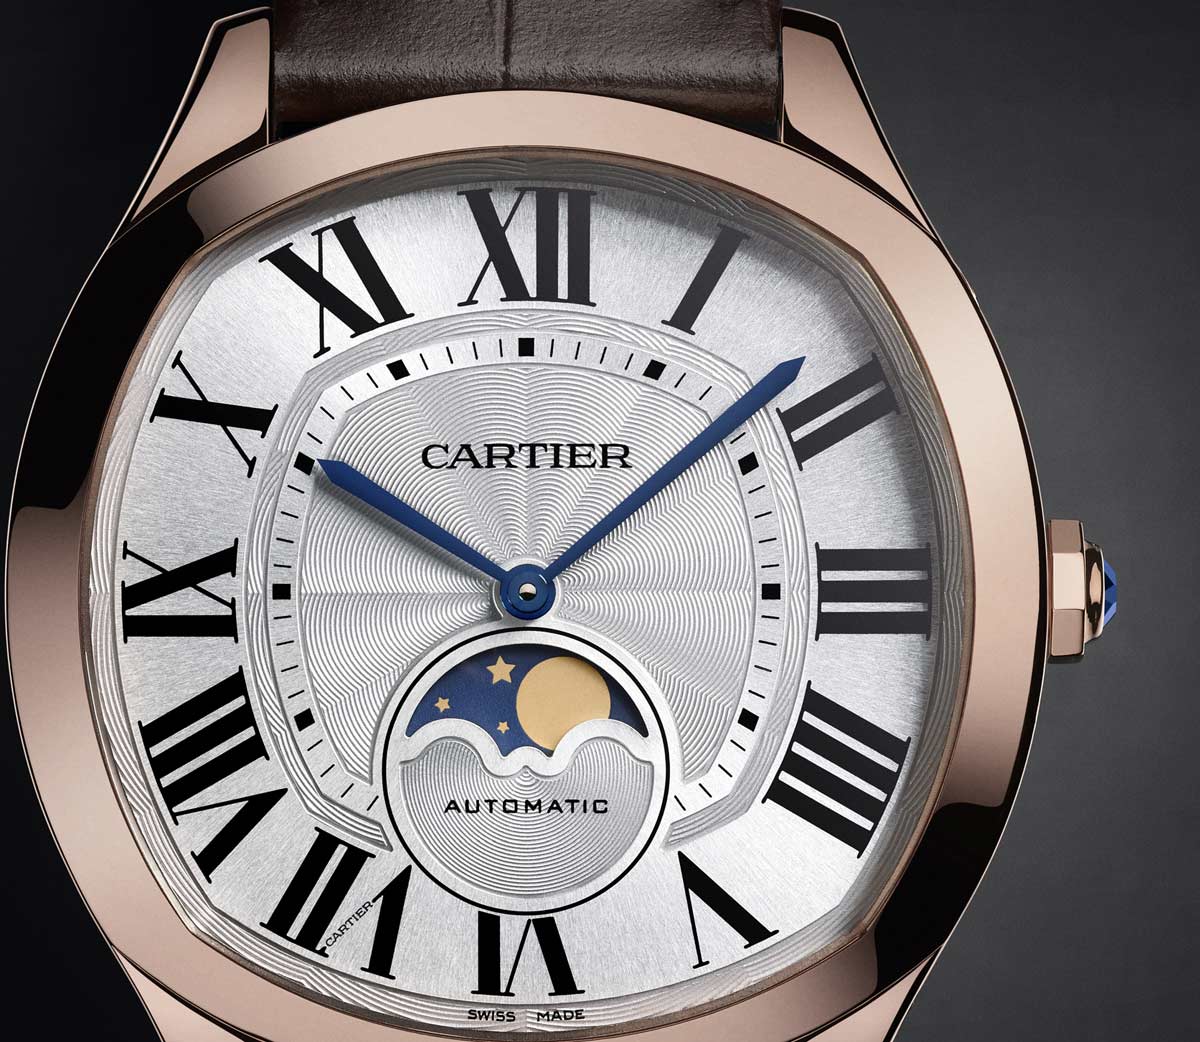 SIHH 2017 Cartier Drive de Cartier, 2017 new models Time and